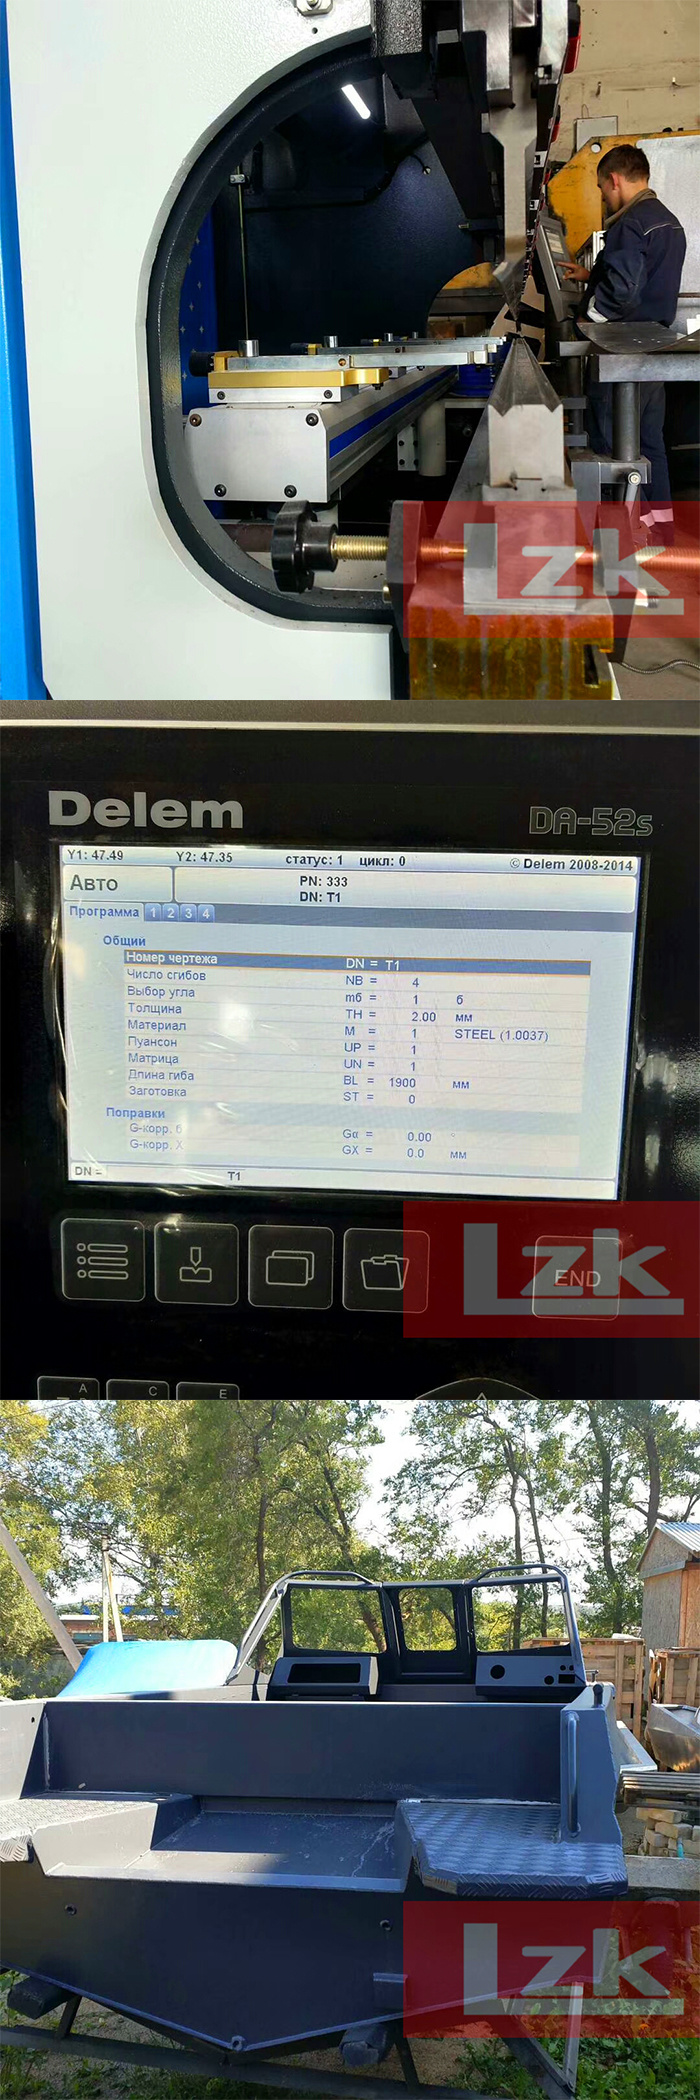 Lzk CNC Automatic Press Brake Operation Manual/Video